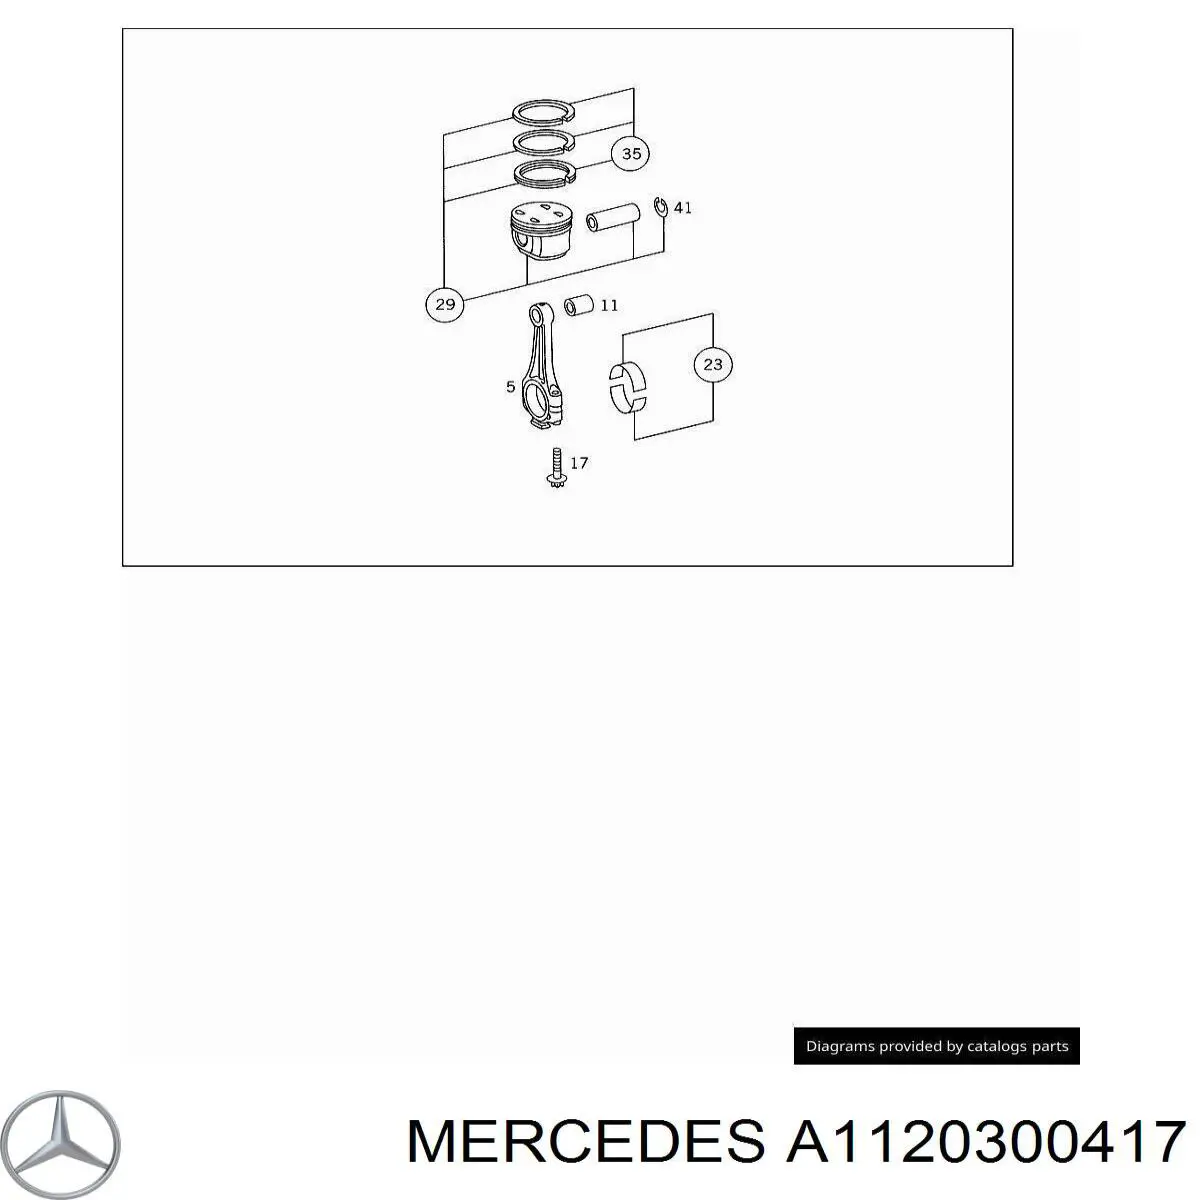 1120300417 Mercedes поршень в комплекте на 1 цилиндр, std